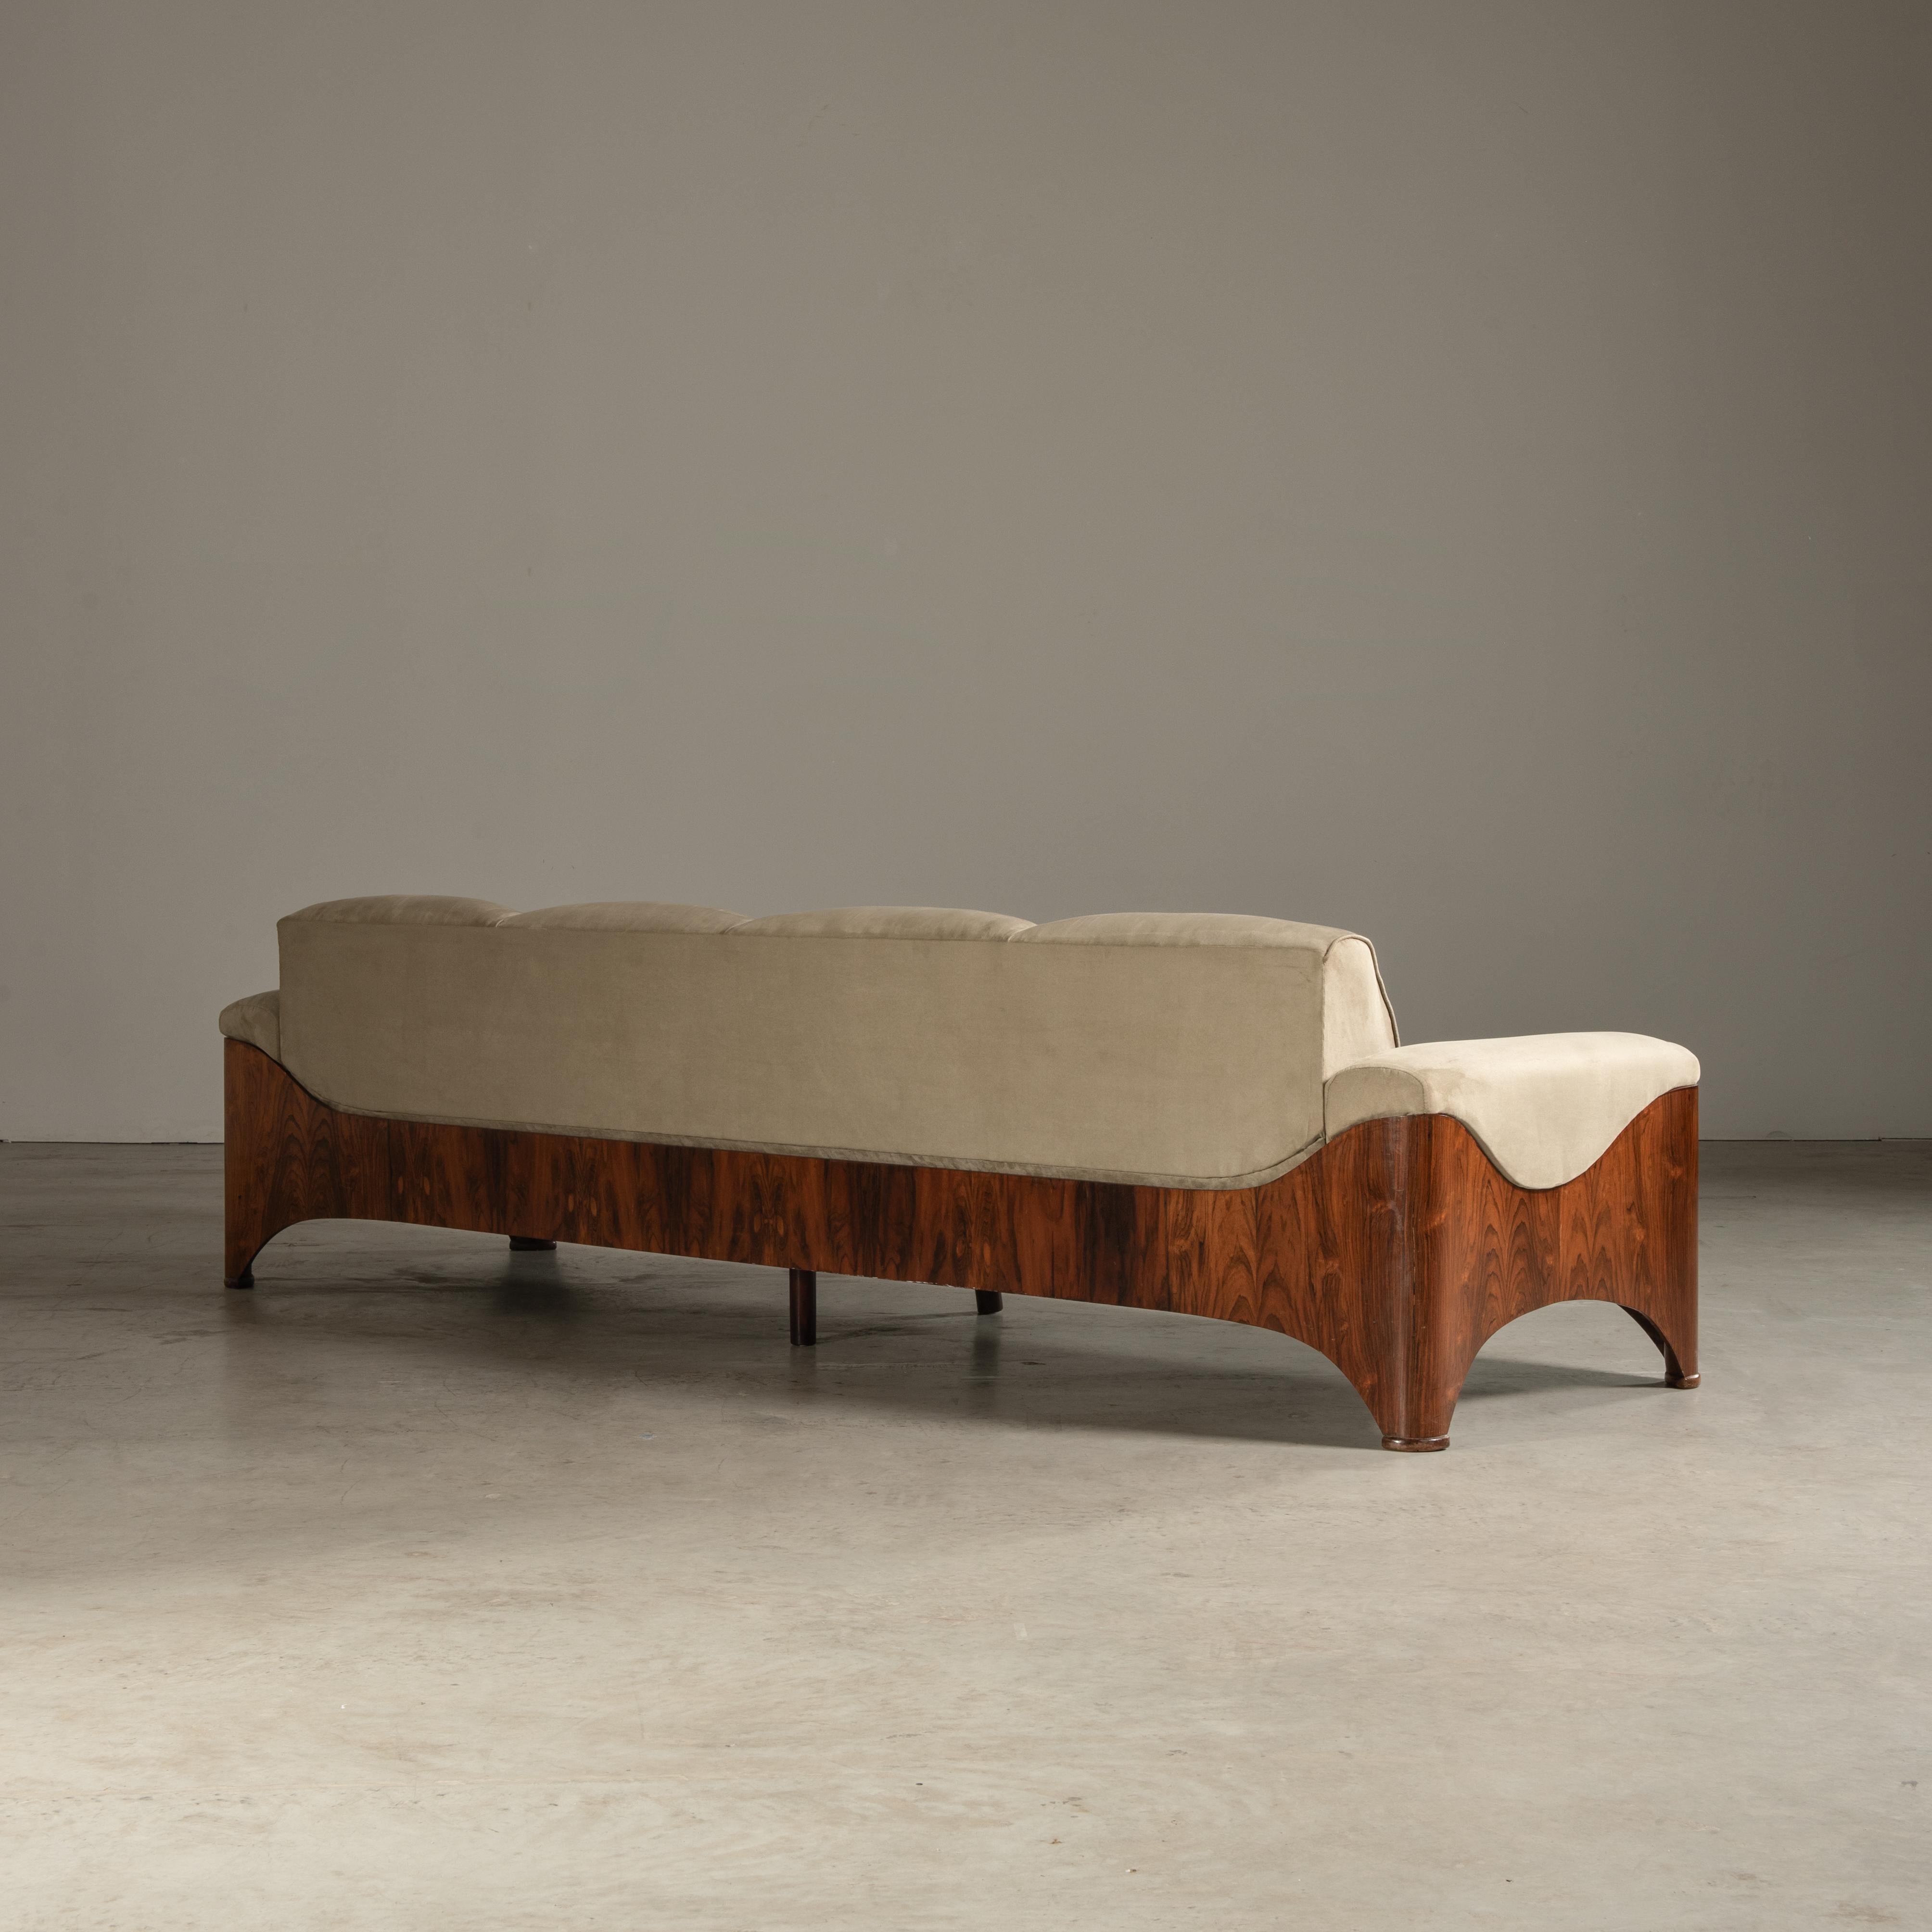 Curvilineal Four-Seater Sofa in Veneered Tropical Hardwood, Brazilian Modernism For Sale 1